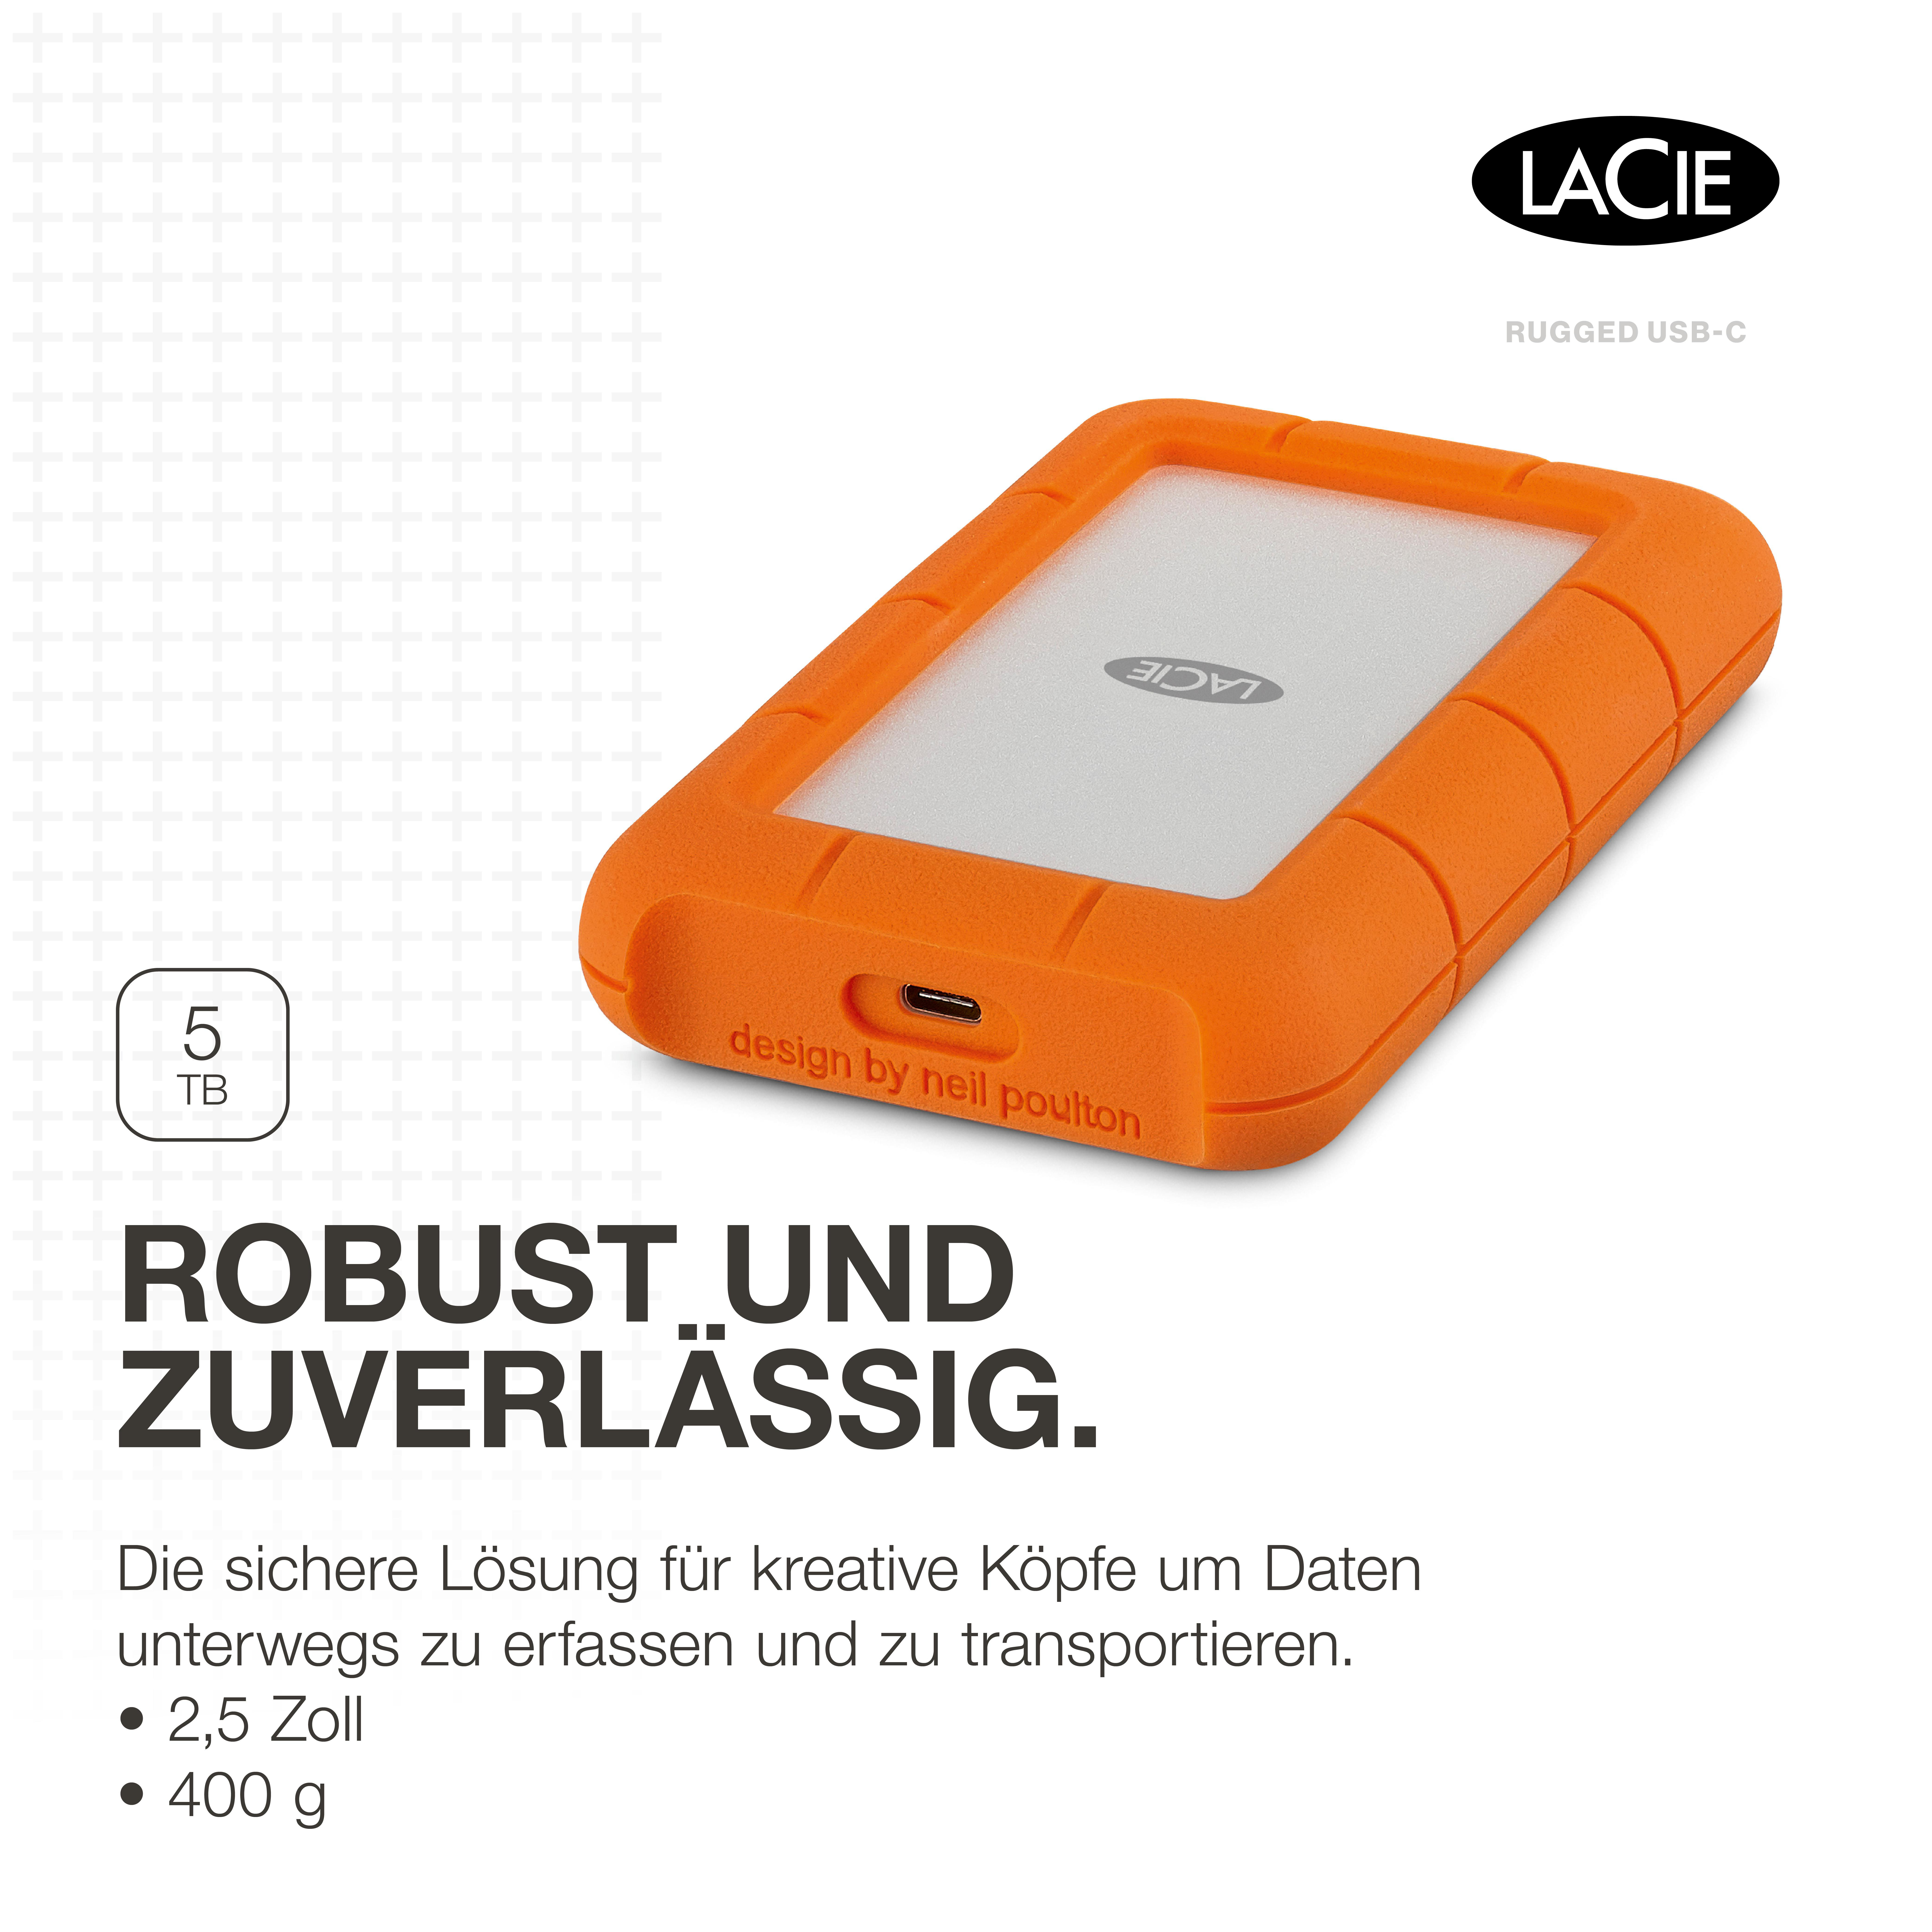 2,5 Zoll, LACIE Rugged USB-C HDD, Festplatte, extern, 5 TB Silber/Orange